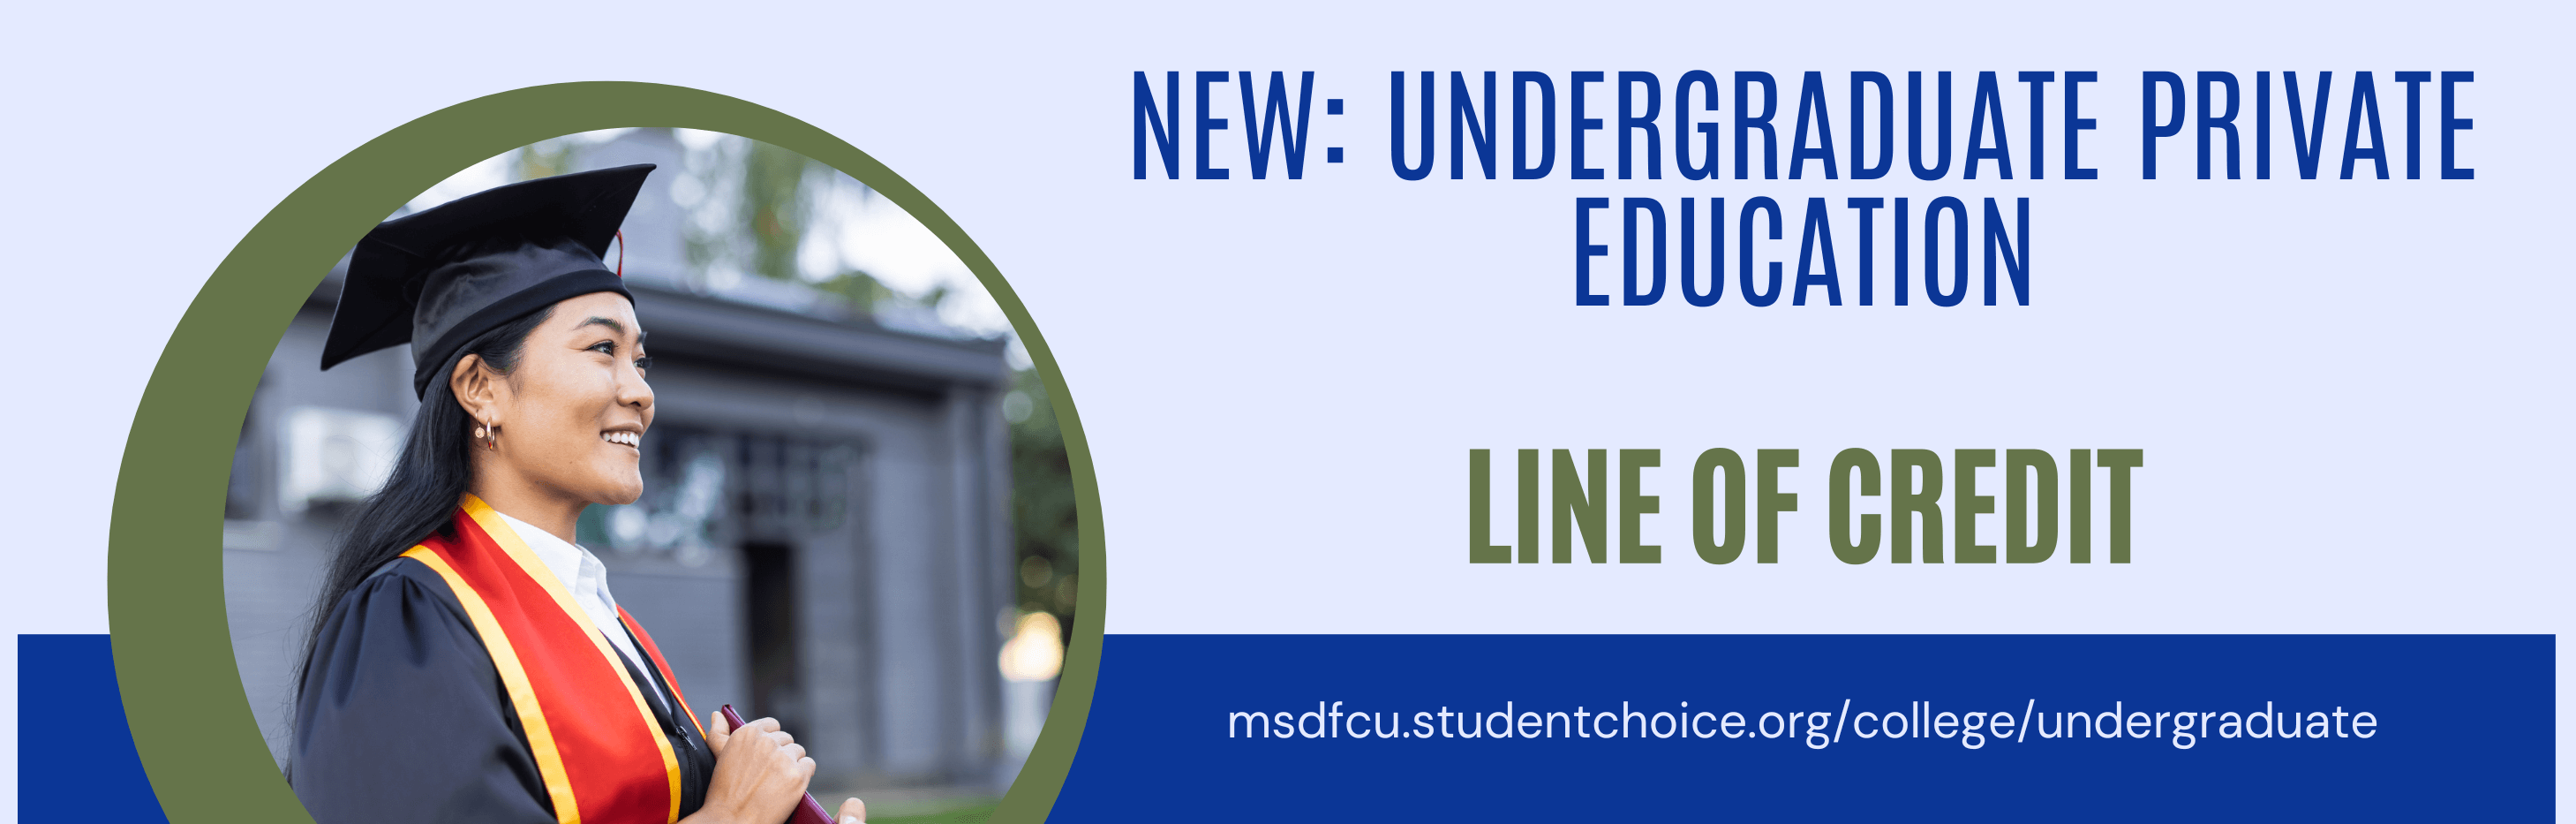 New: UnderGraduate Private Education Line of Credit. msdfcu.studentchoice.org/college/undergraduate